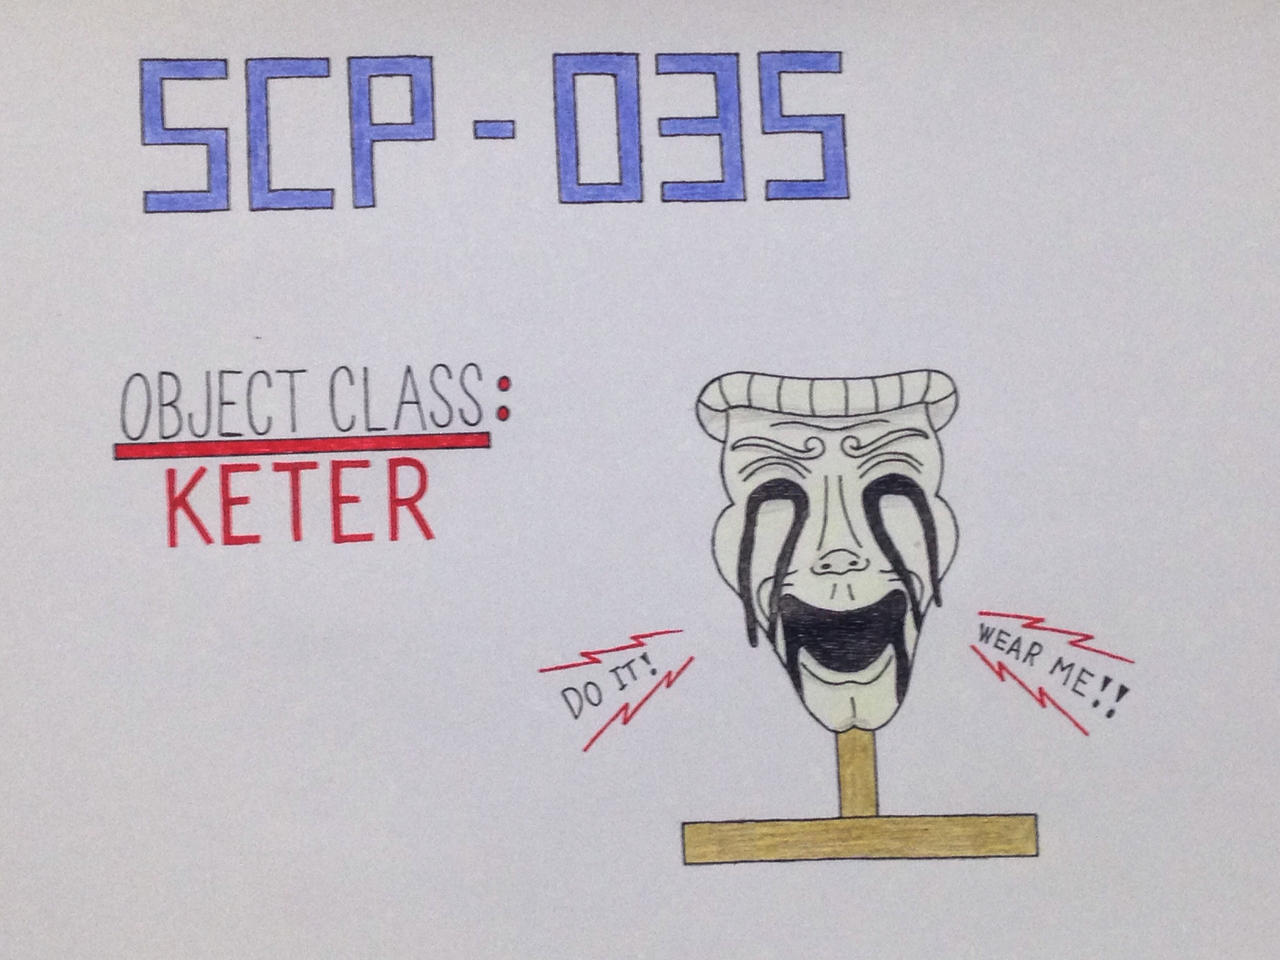 SCP-035: The Possessive Mask by ThatSnowpixOmega on DeviantArt